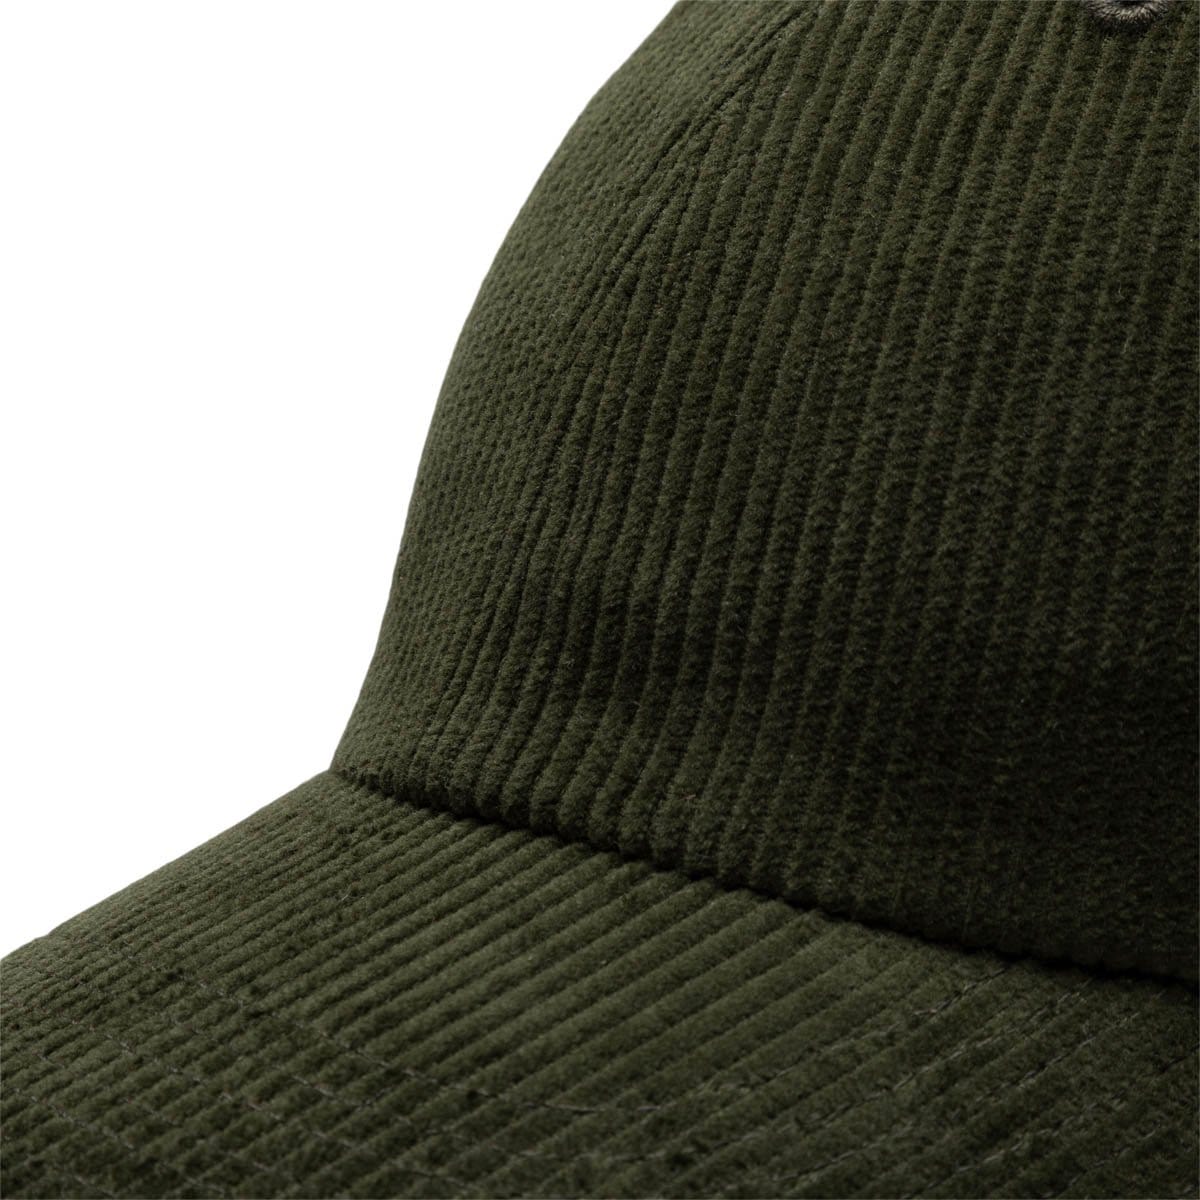 Jam Headwear GREEN / O/S CORD HAT